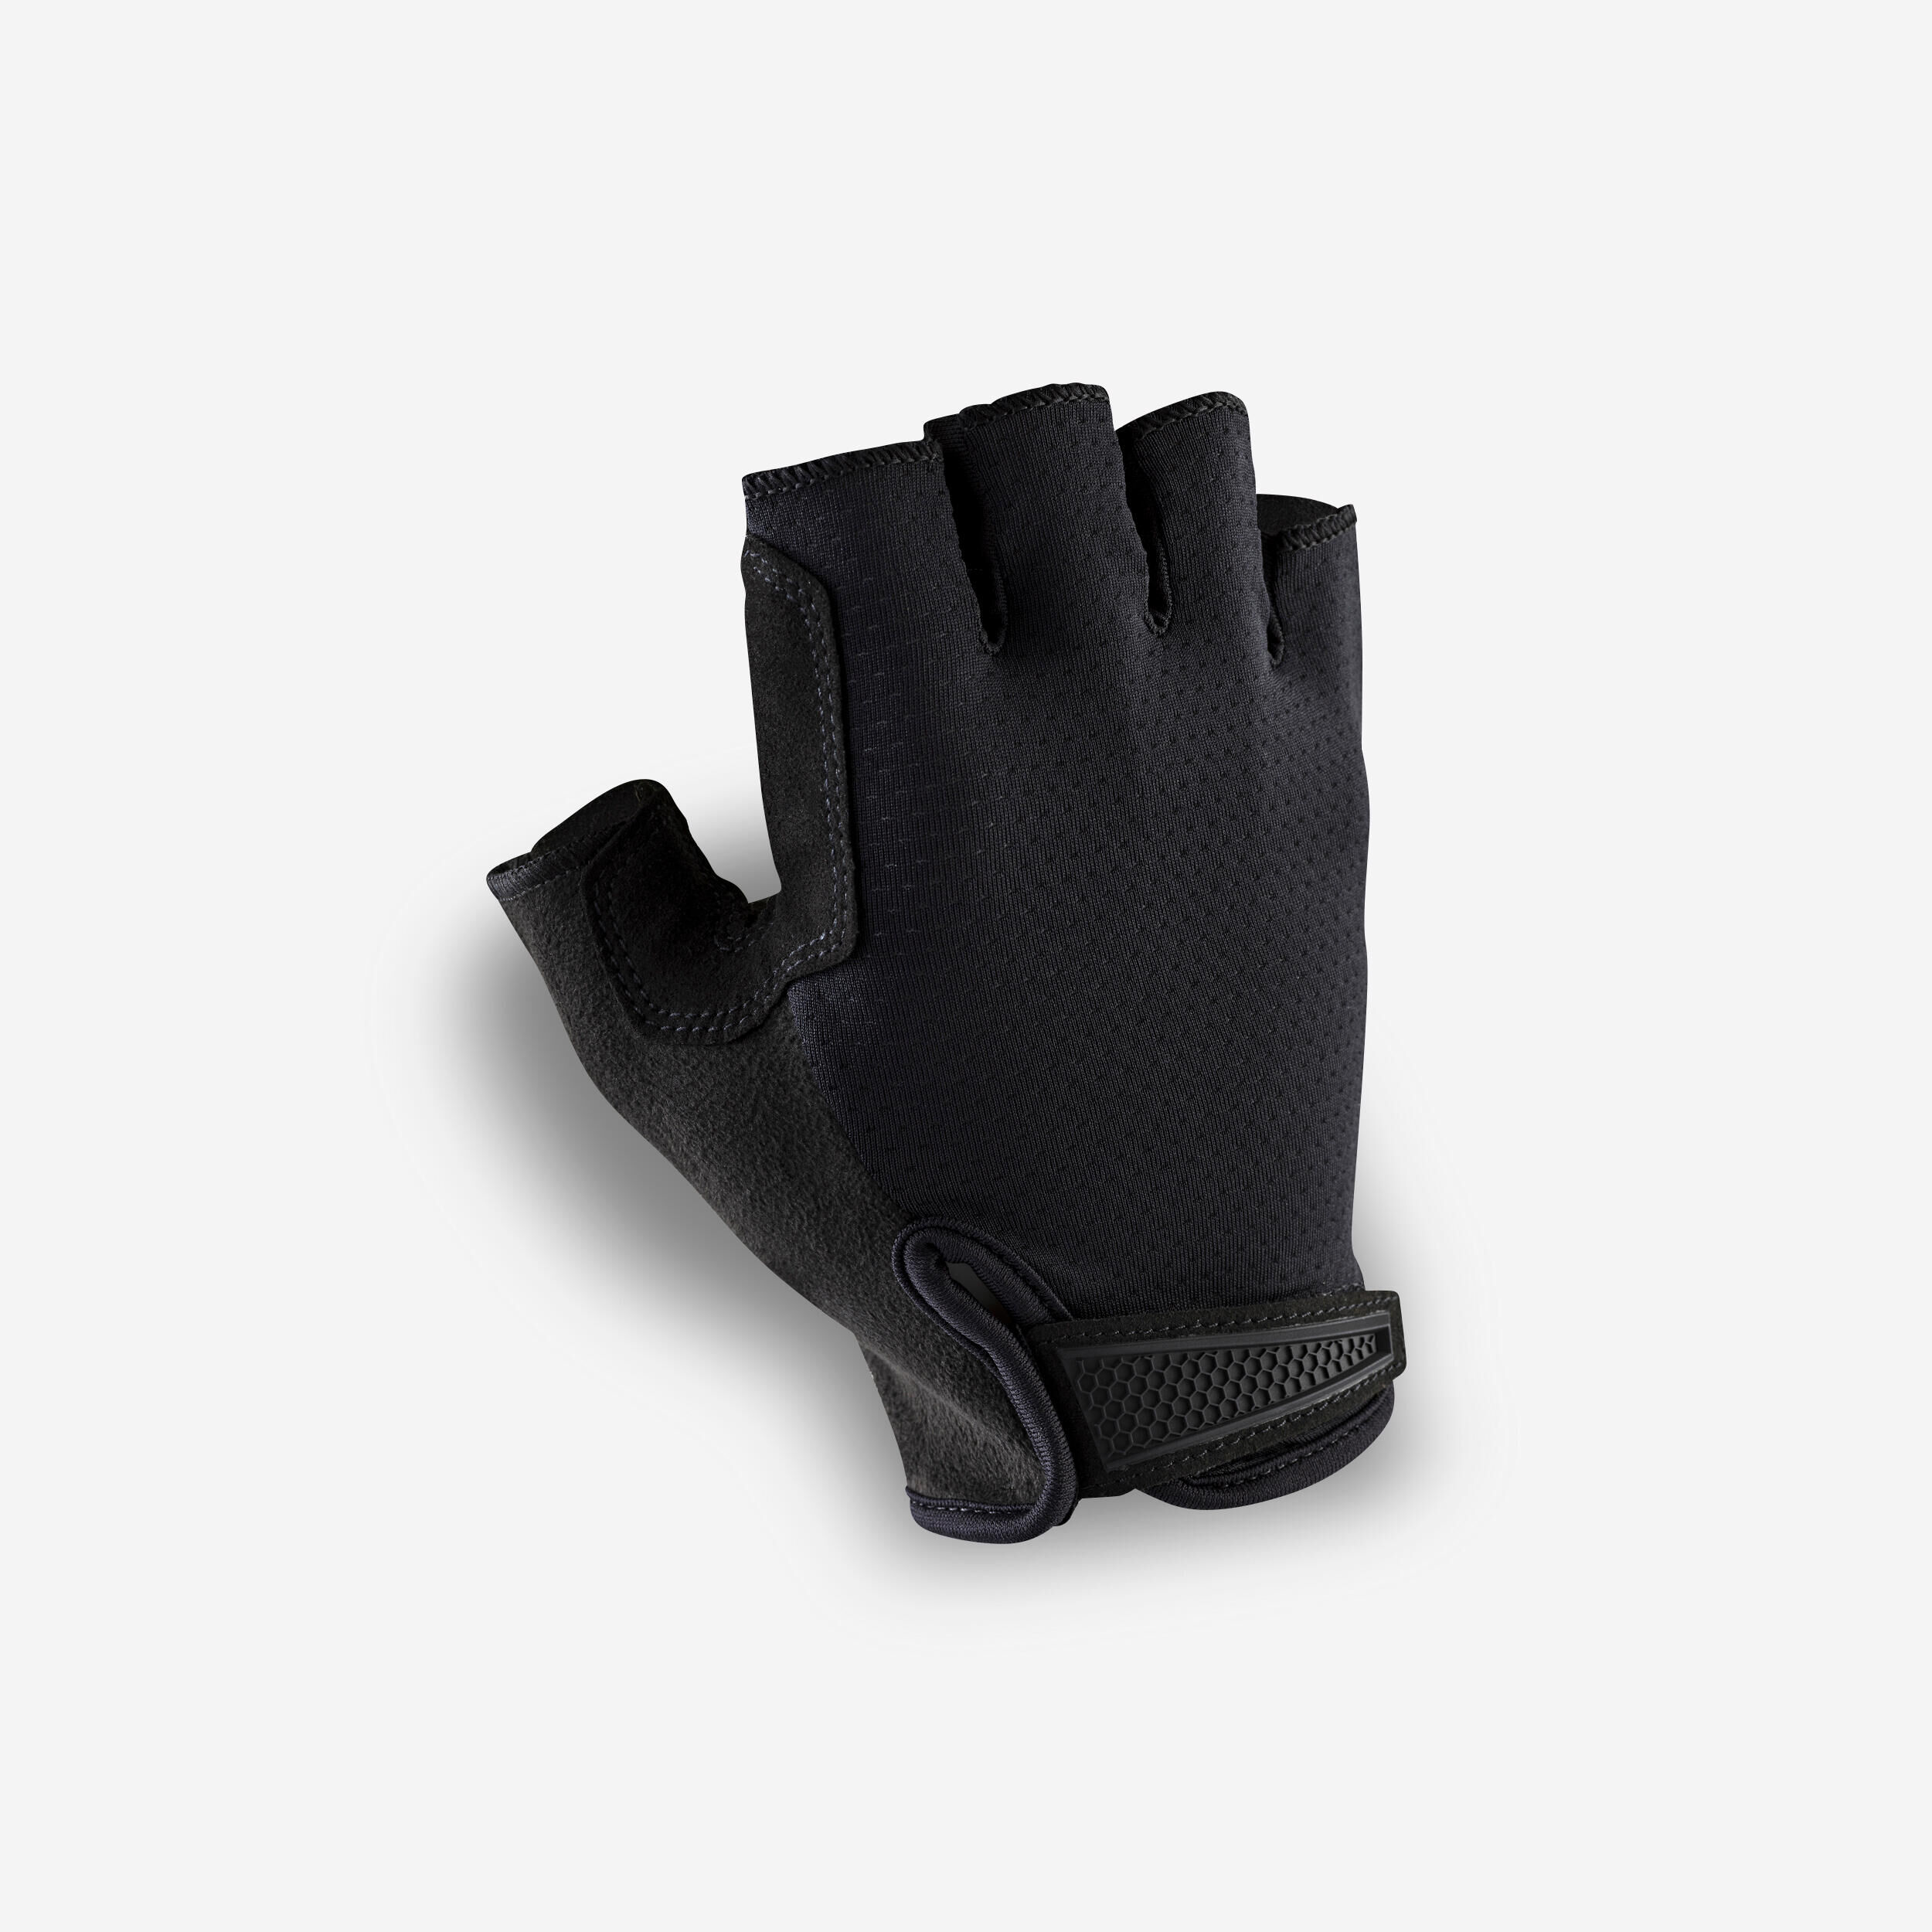 VAN RYSEL RoadCycling 900 Road Cycling Gloves - Black